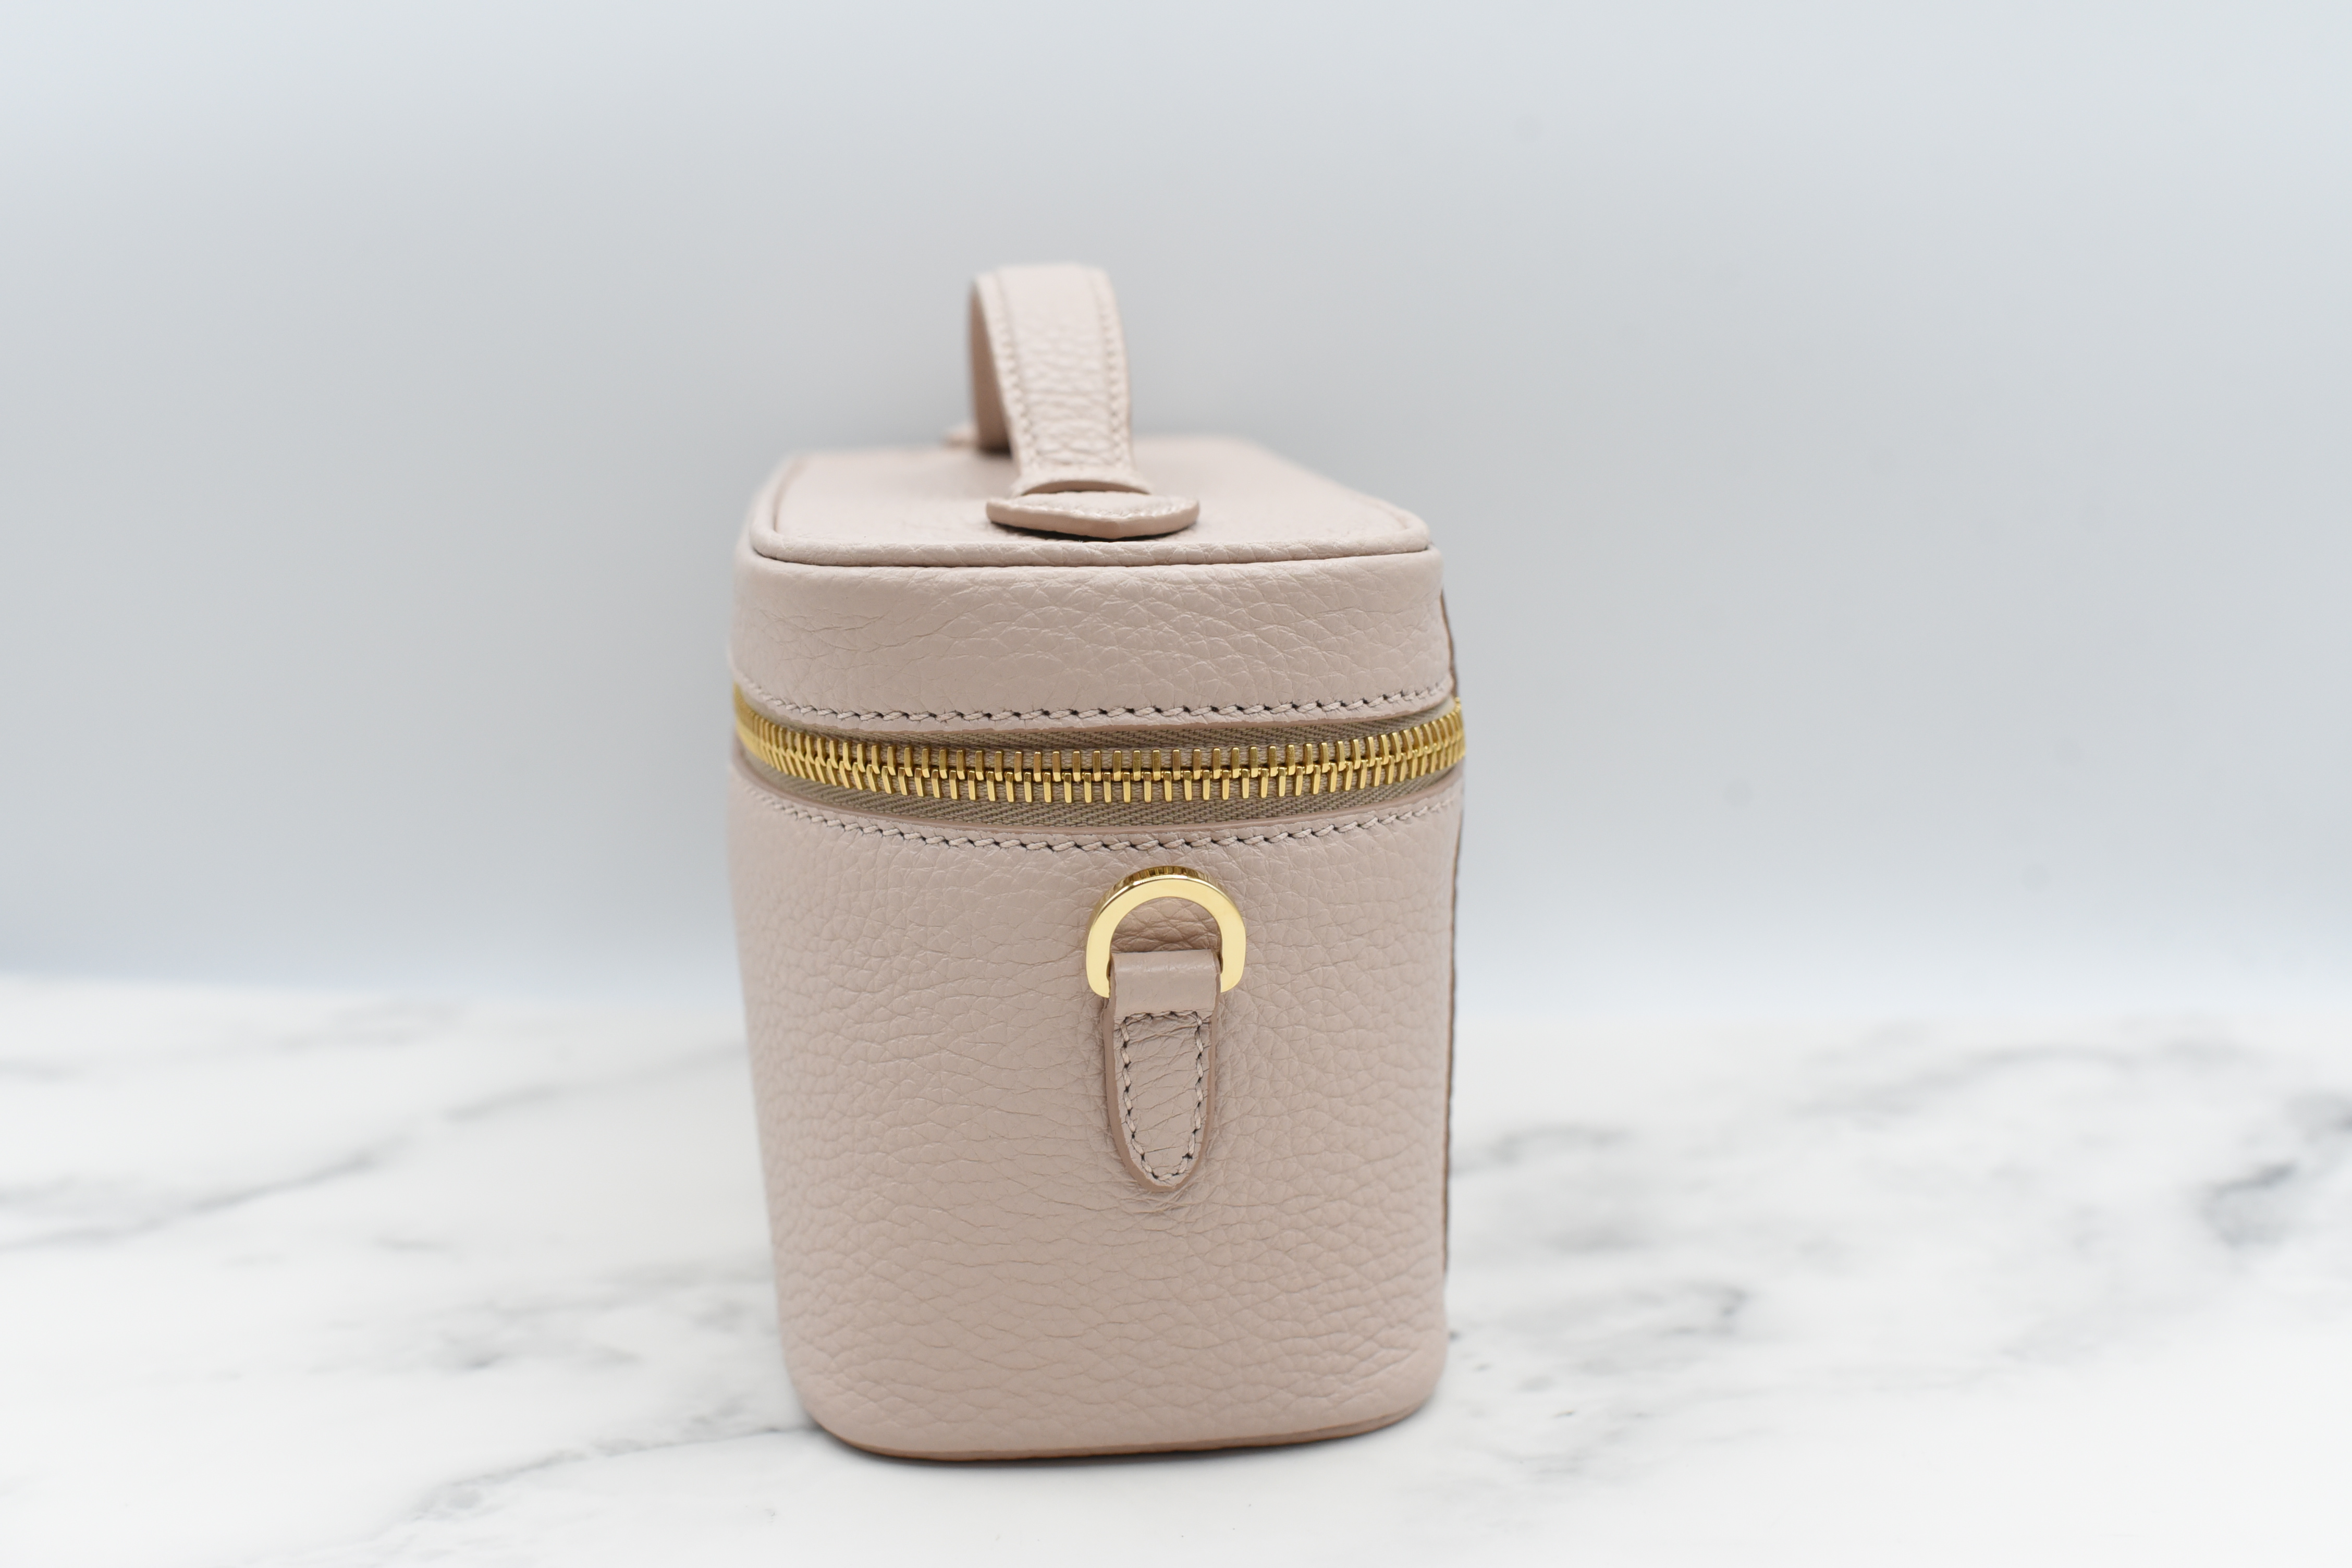 Prada Mini Boston Bag - Gold Crossbody Bags, Handbags - PRA51153